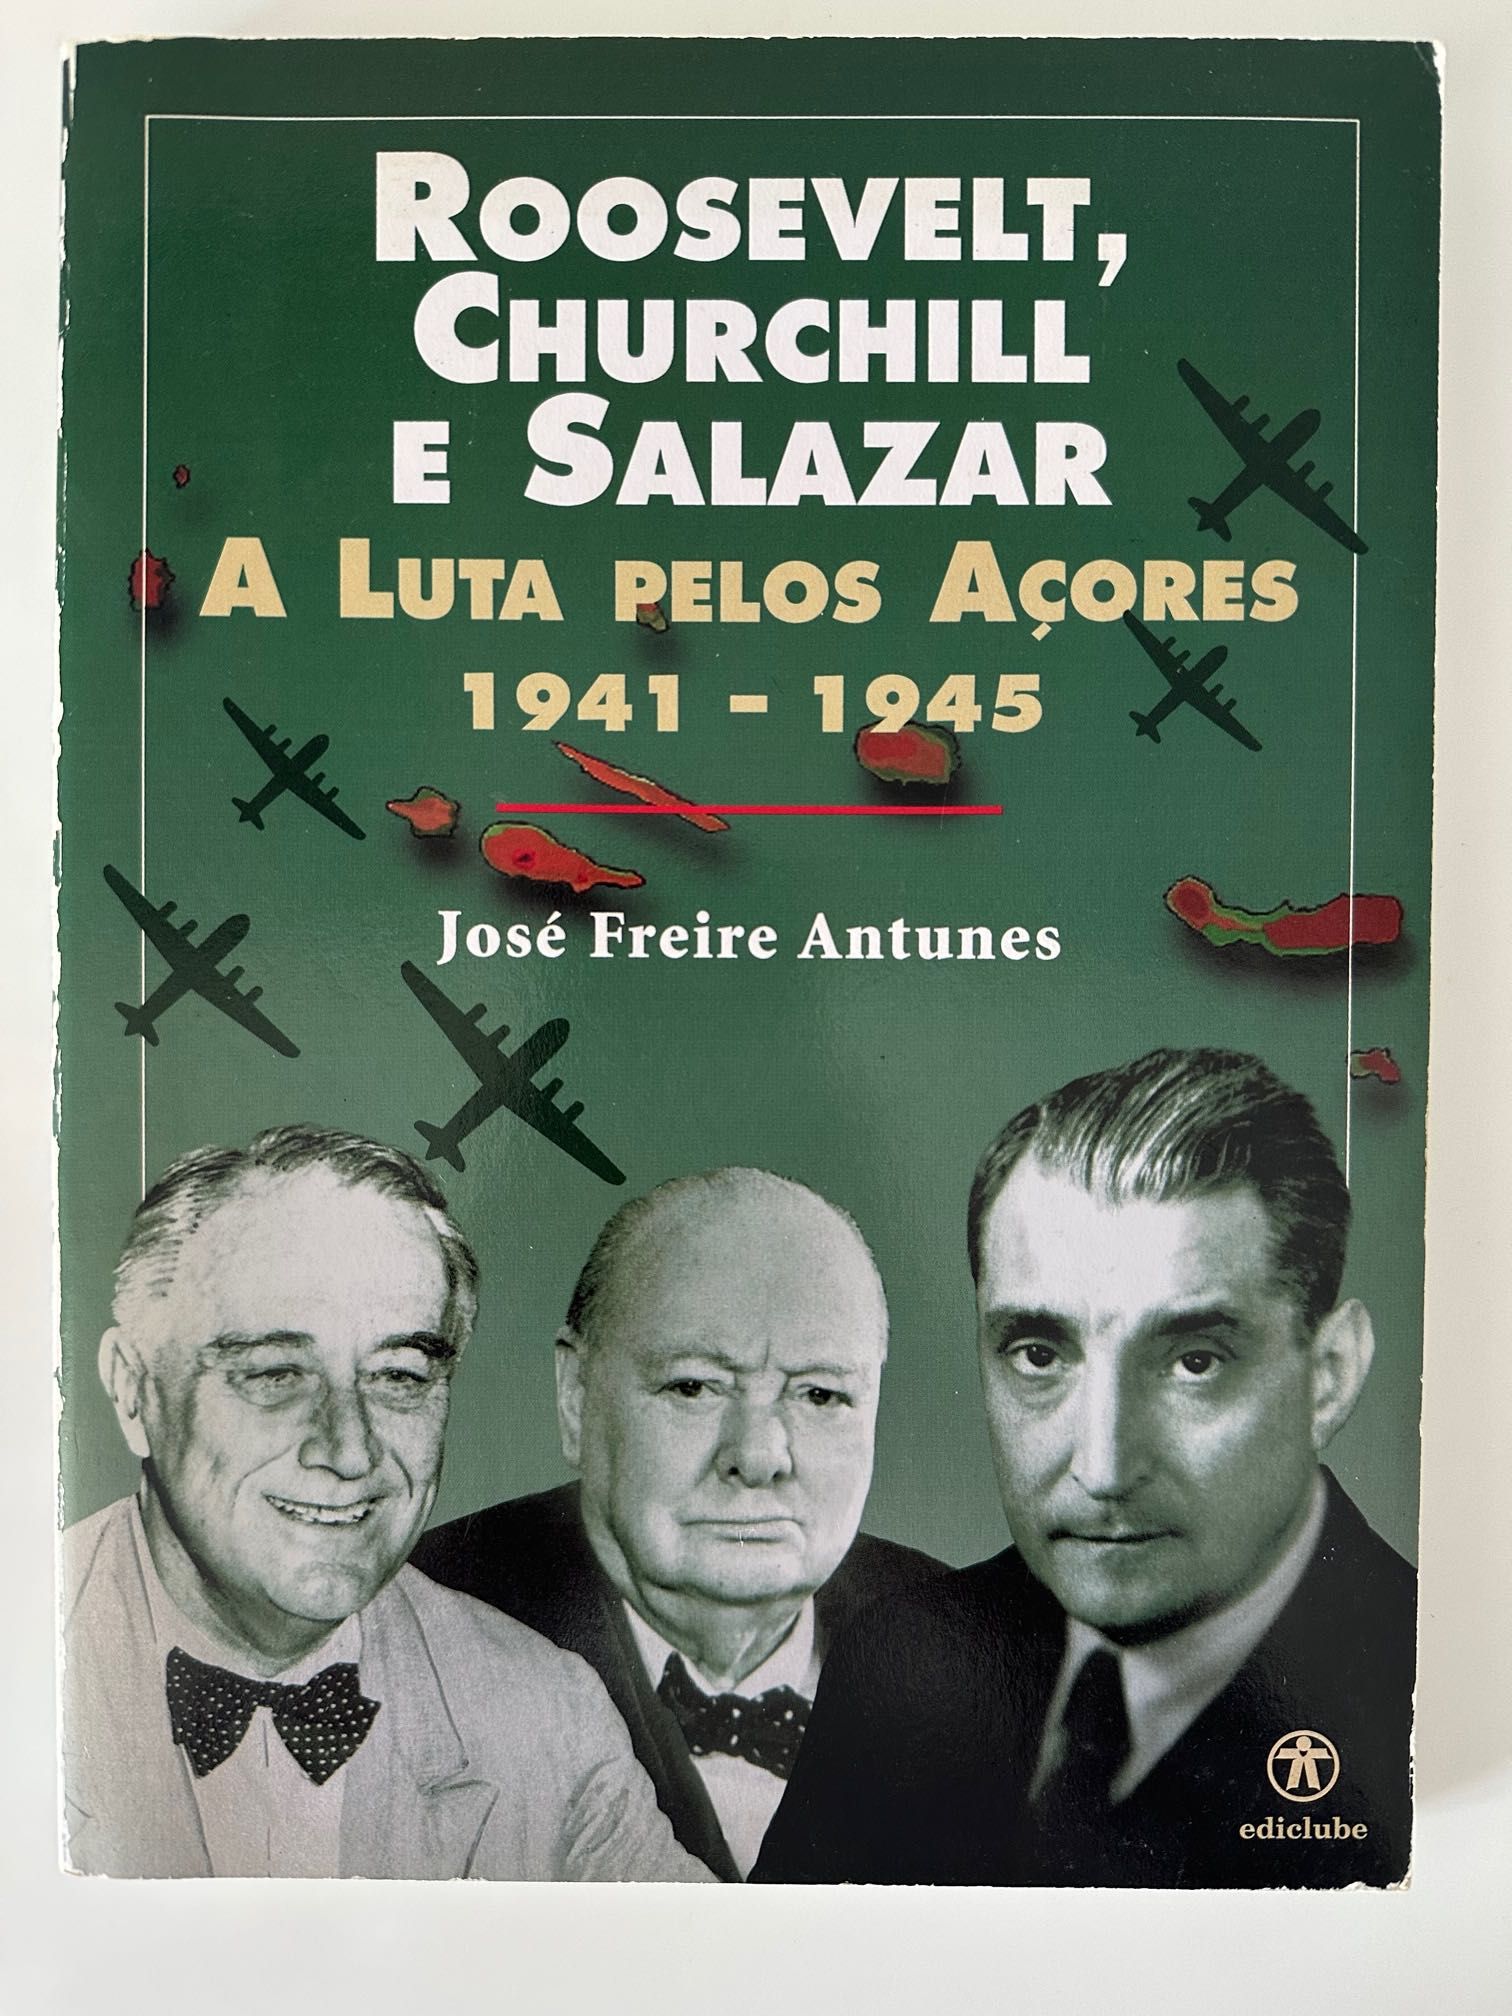 Roosevelt, Churchill e Salazar. A Luta pelos Açores 1941/1945